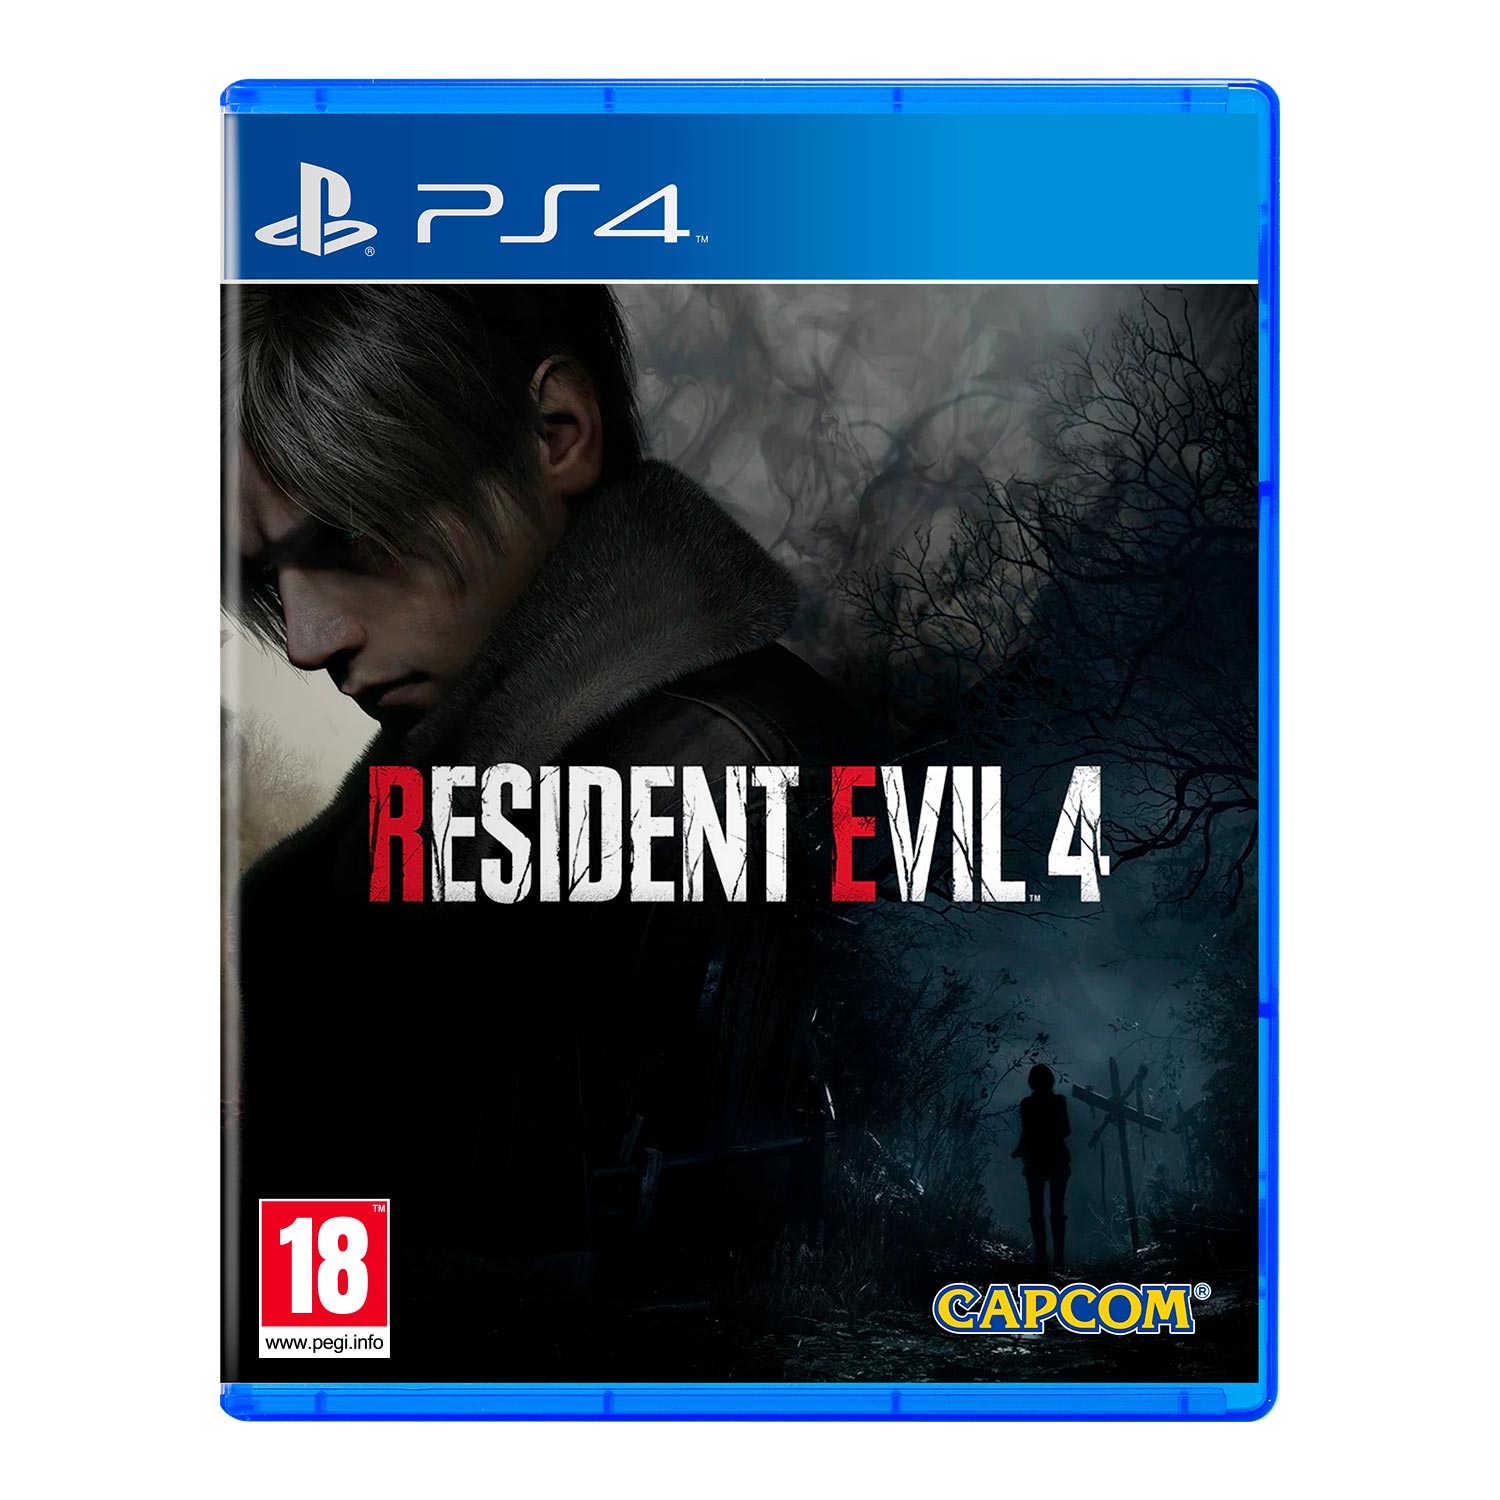 Resident Evil 4 Playstation 4 Euro